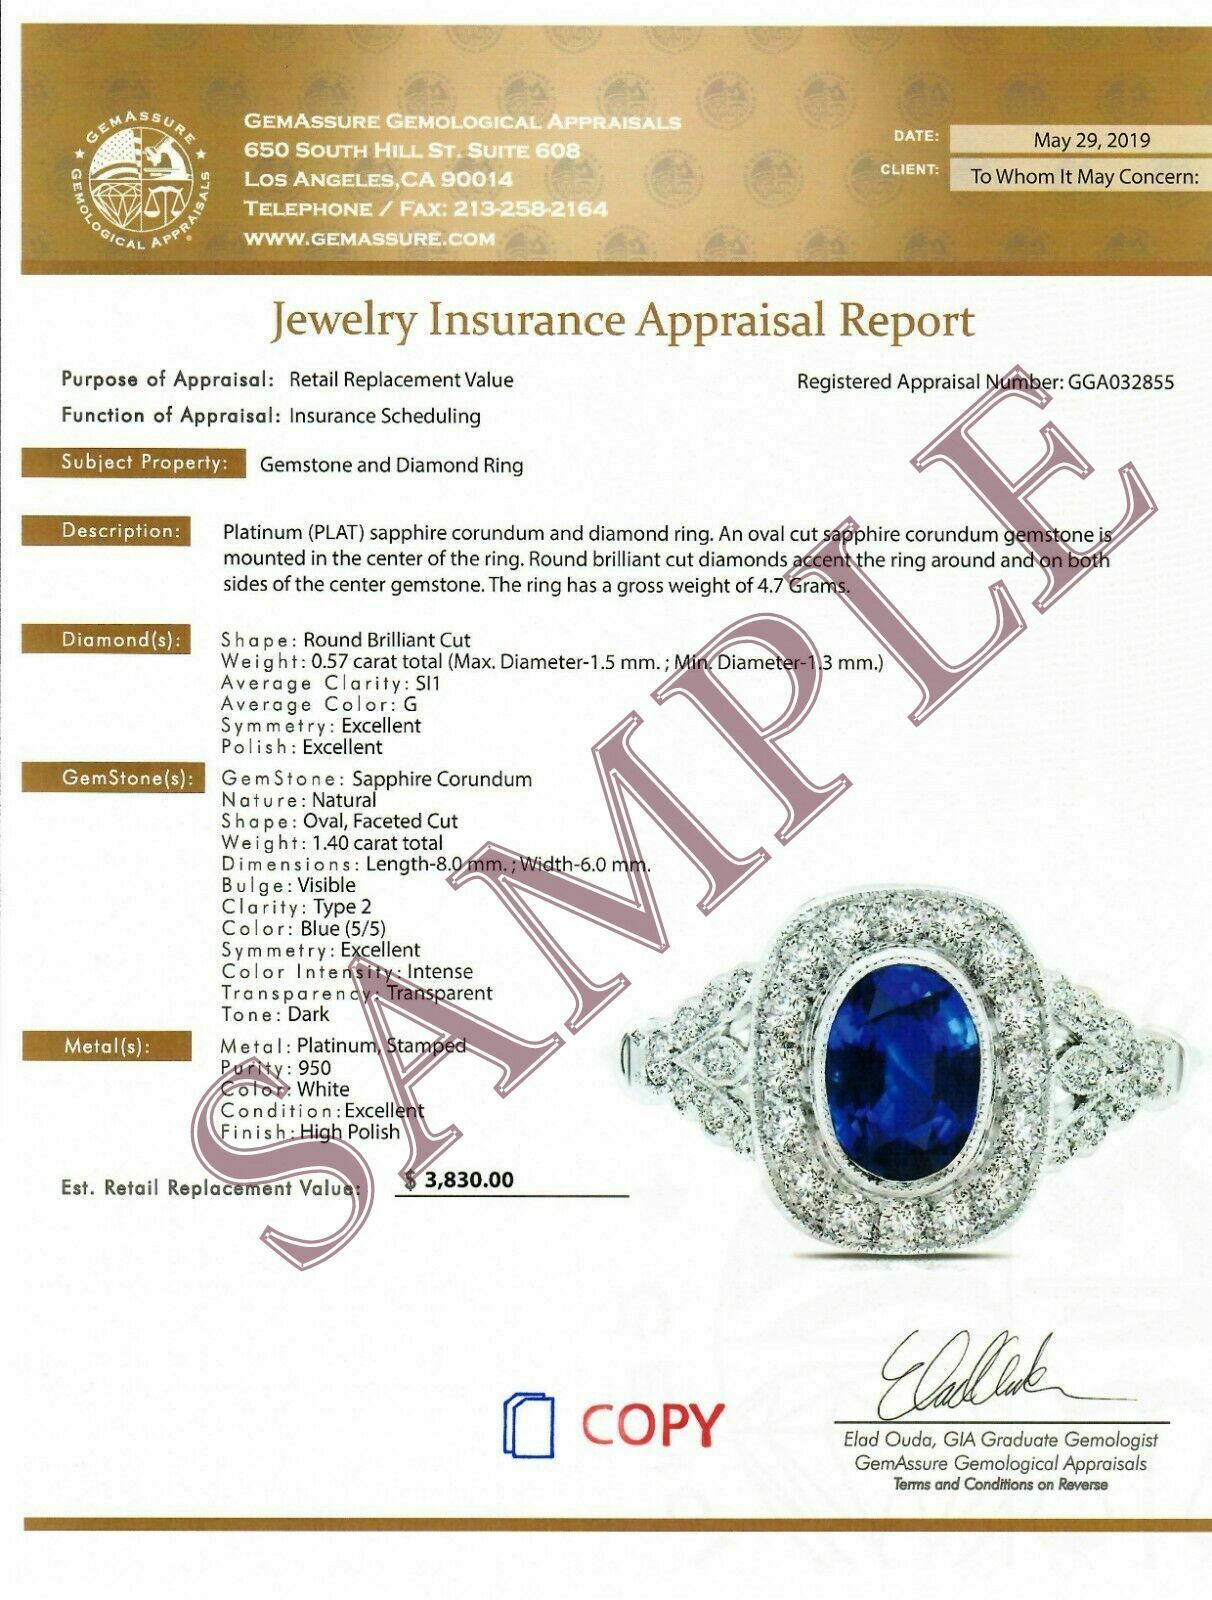 Art Deco Fancy Cut Blue Sapphire Diamond Platinum Ring